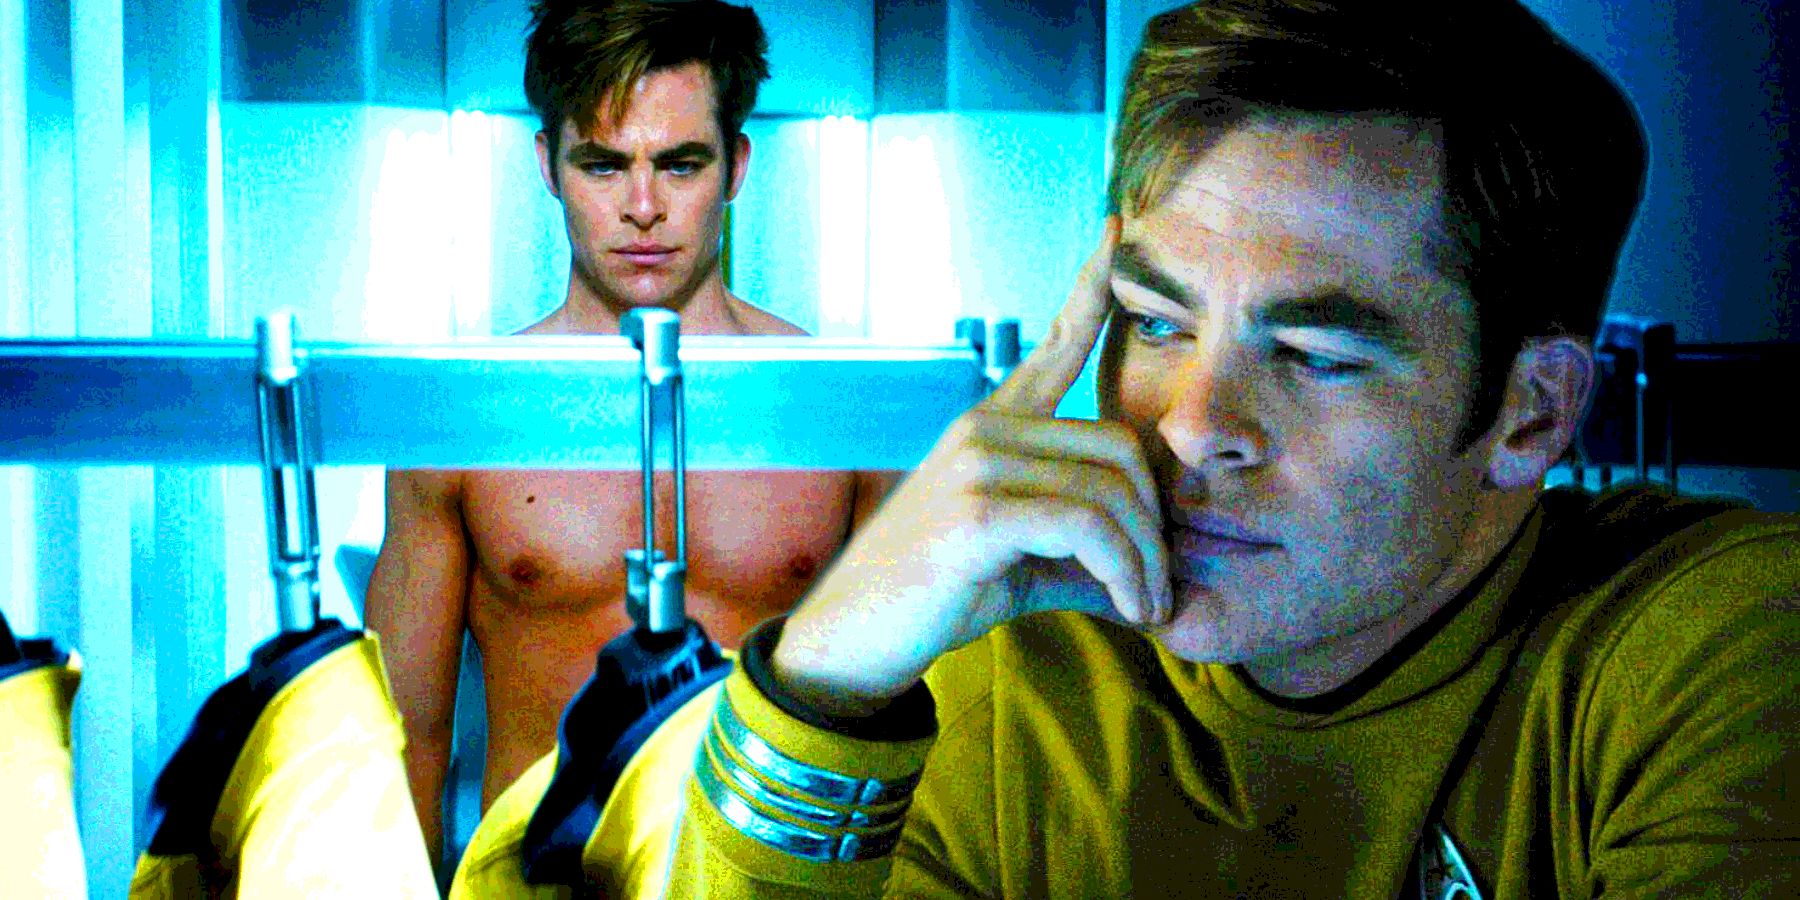 Kirk looks at a wardrobe full of yellow uniforms